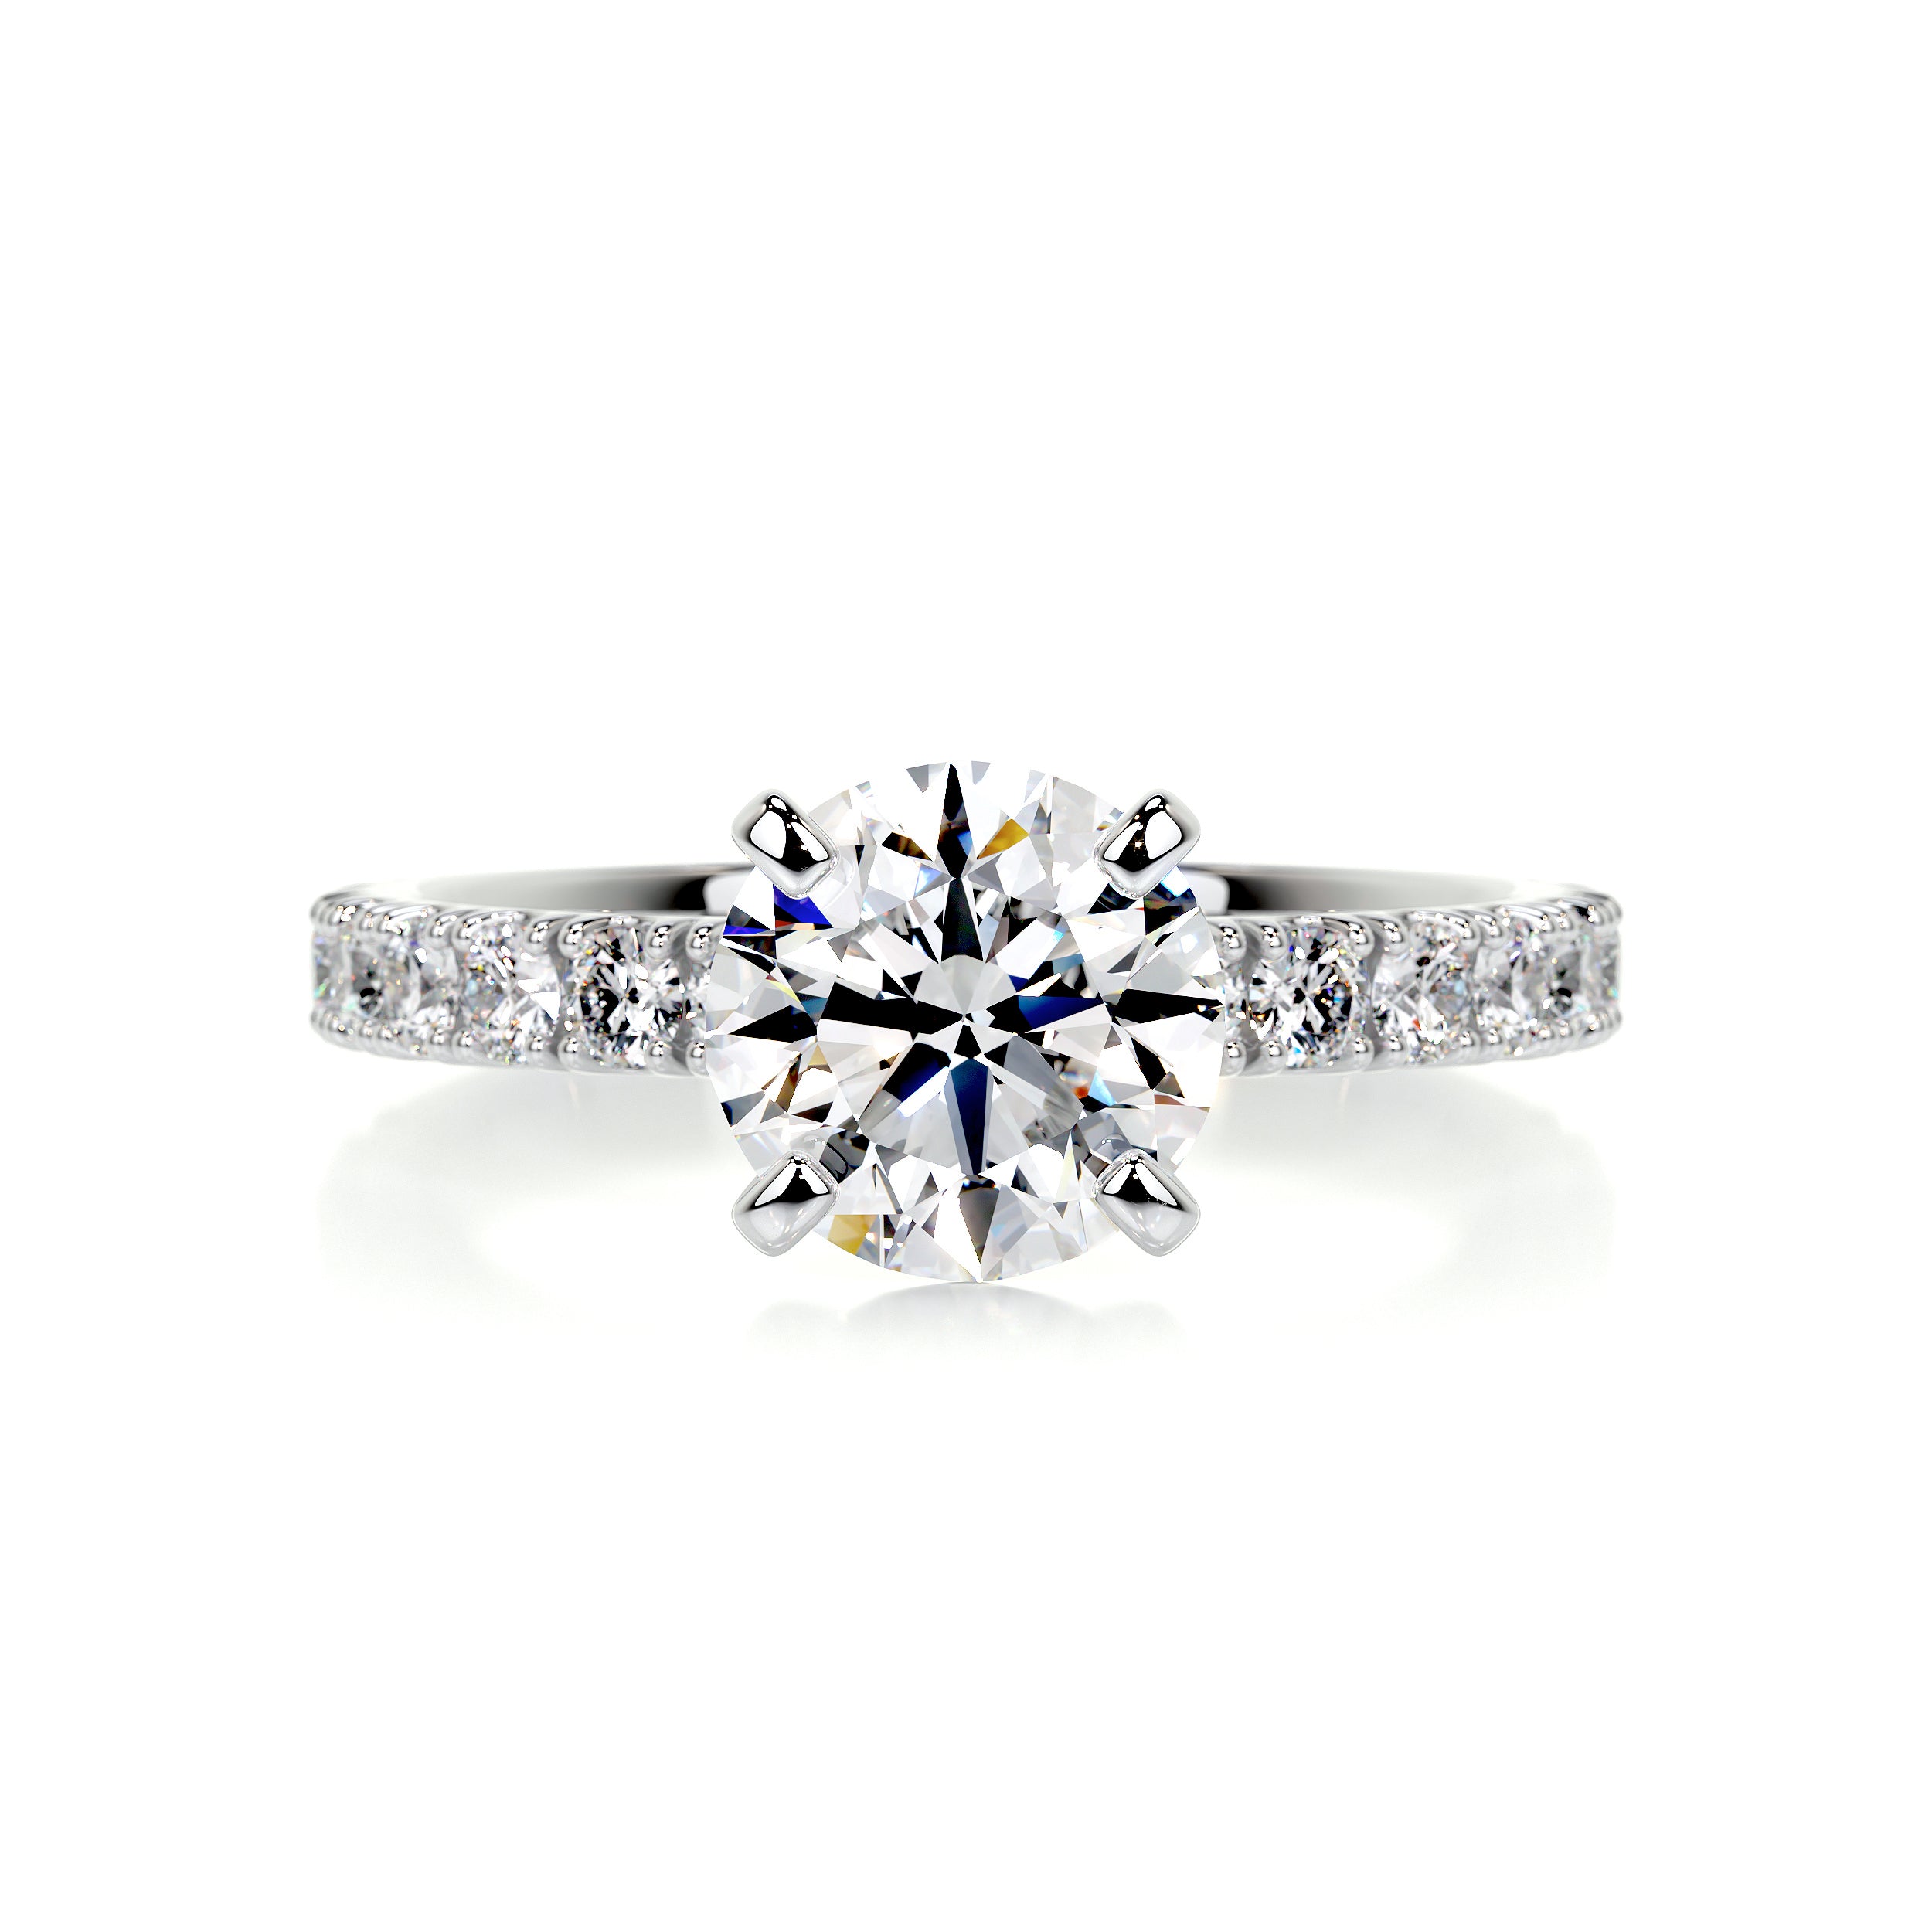 Alison Diamond Engagement Ring   (2 Carat) -14K White Gold